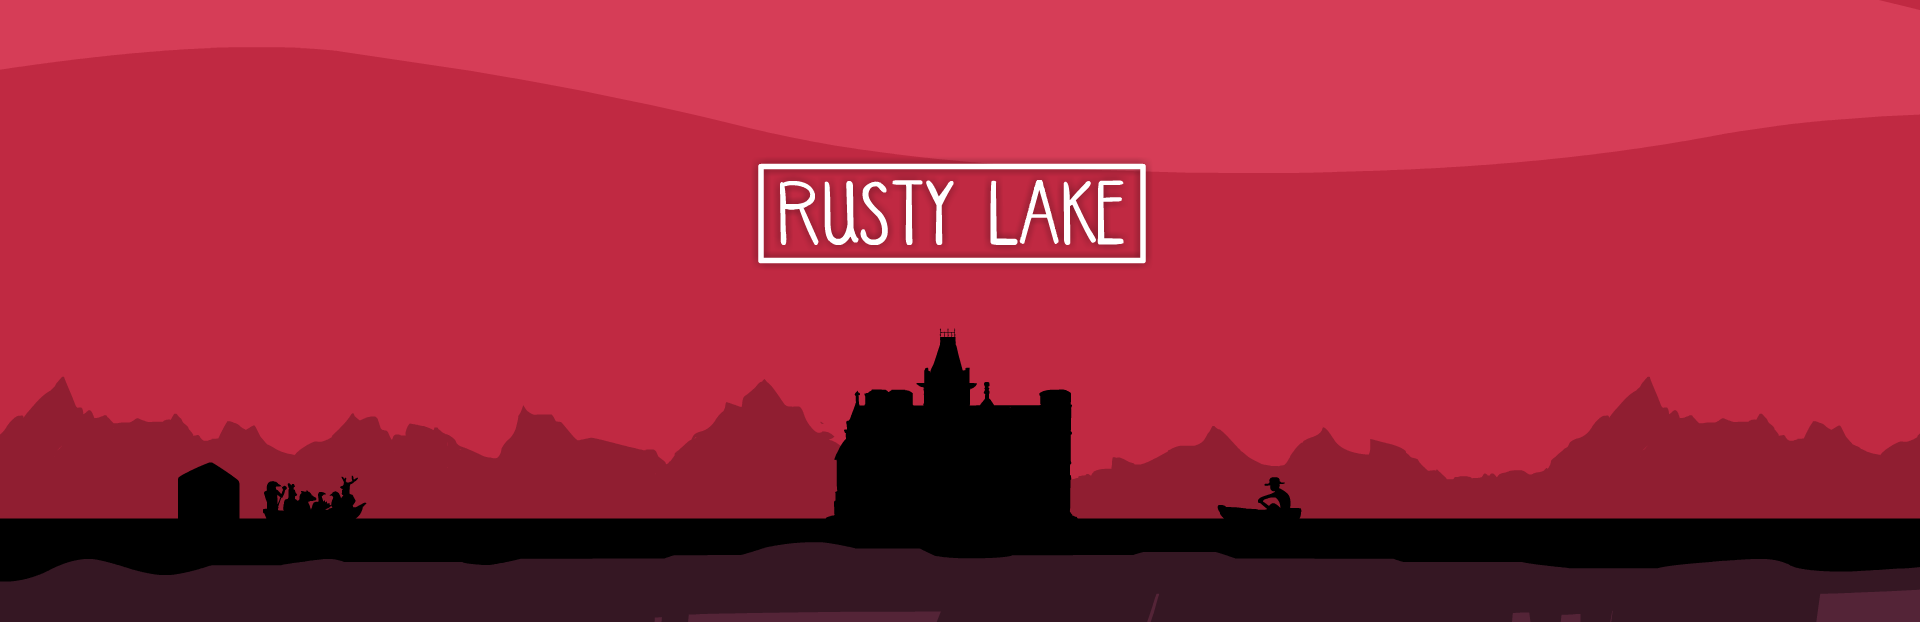 Steam munity rusty lake hotel